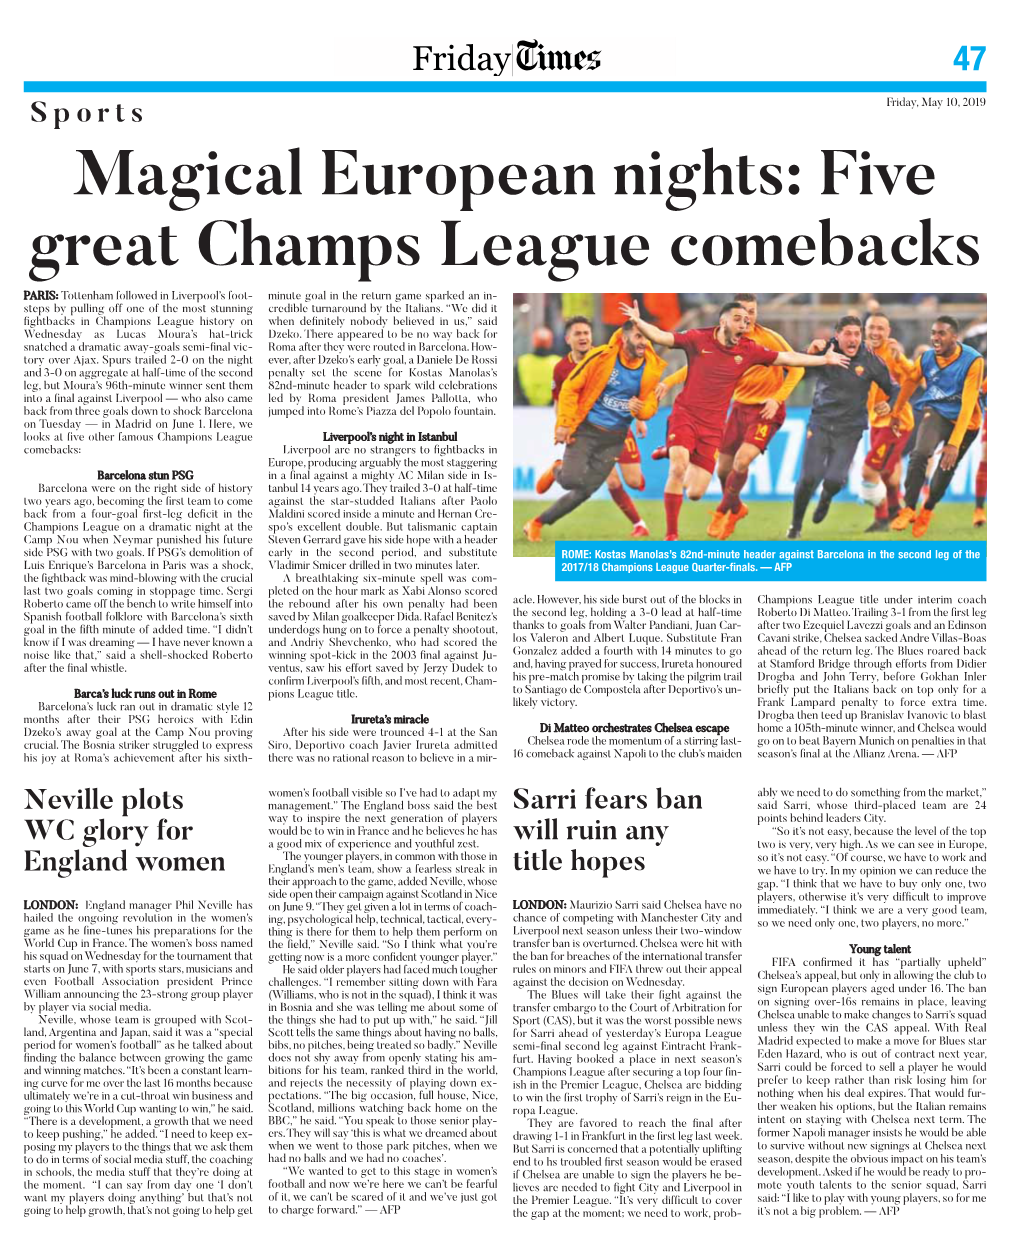 Magical European Nights: Five Great Champs League Comebacks